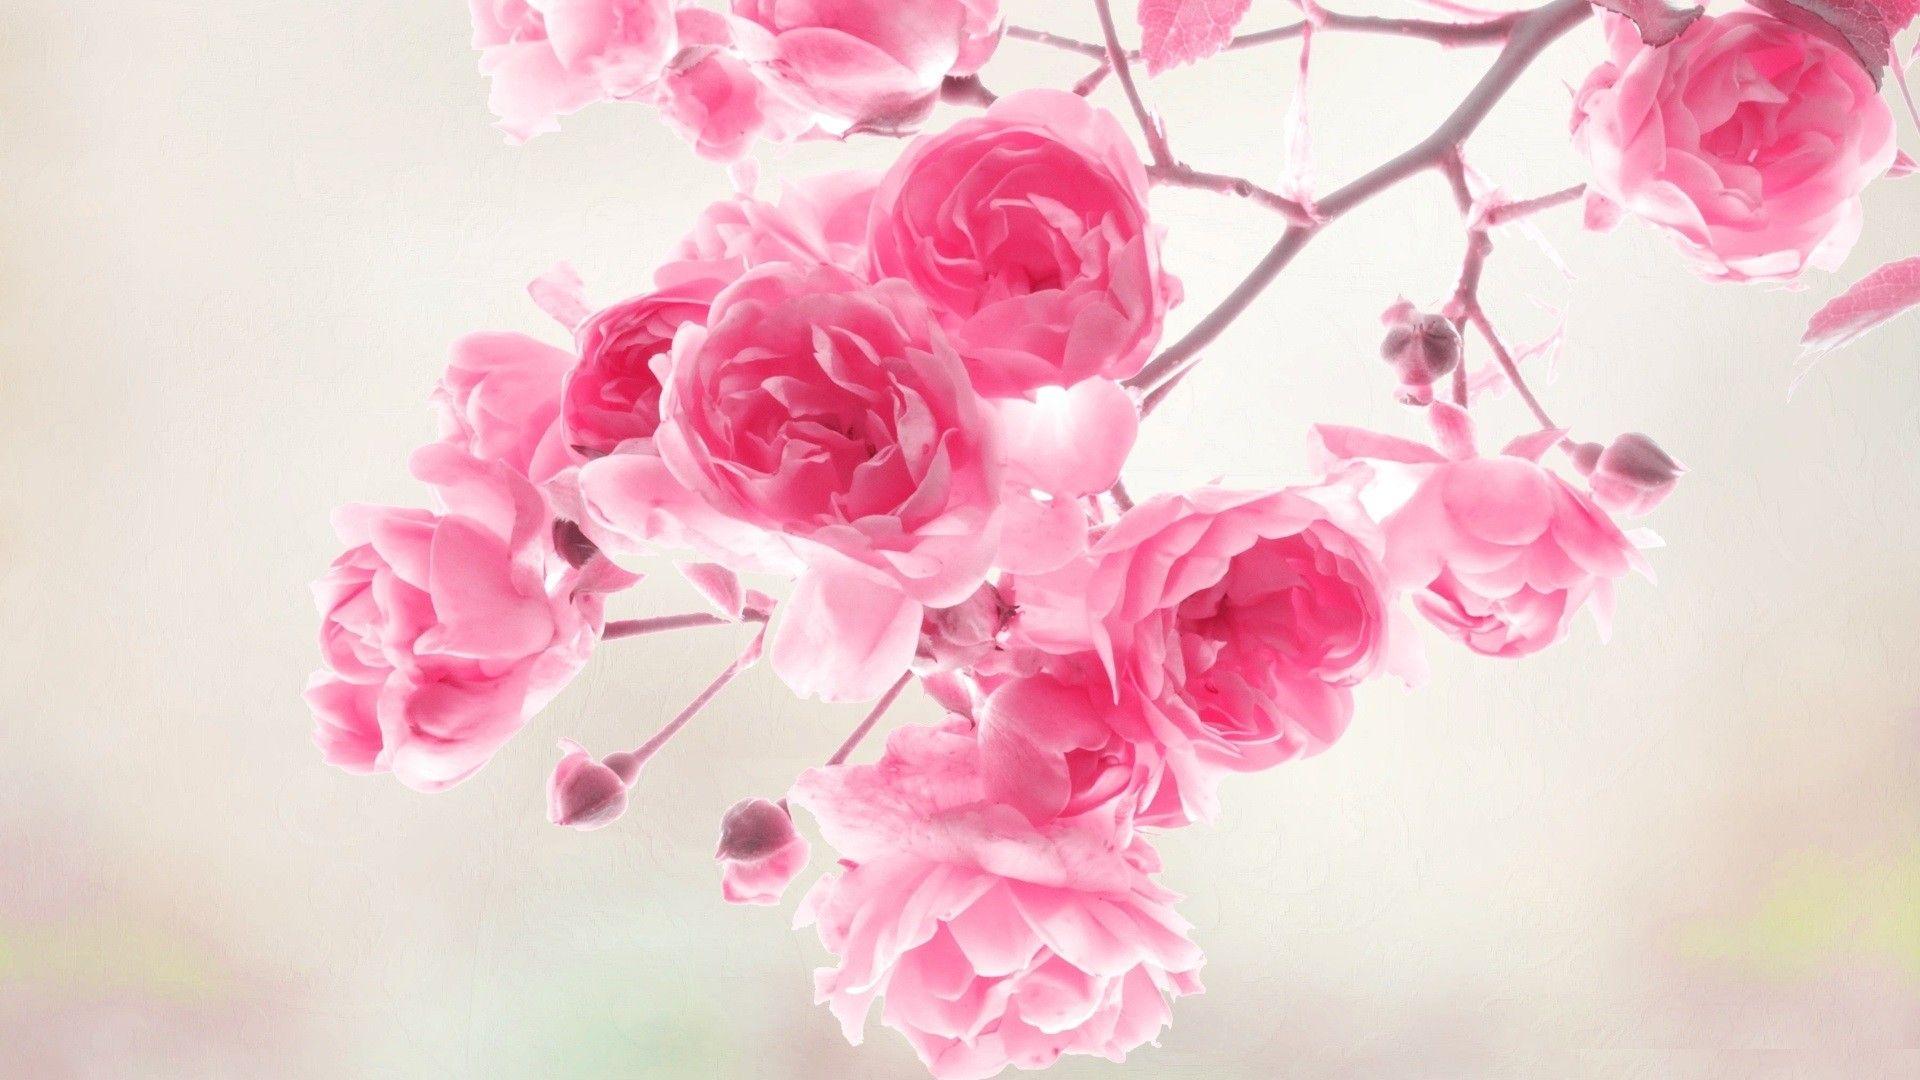 beautiful flower wallpapers for desktop full screen